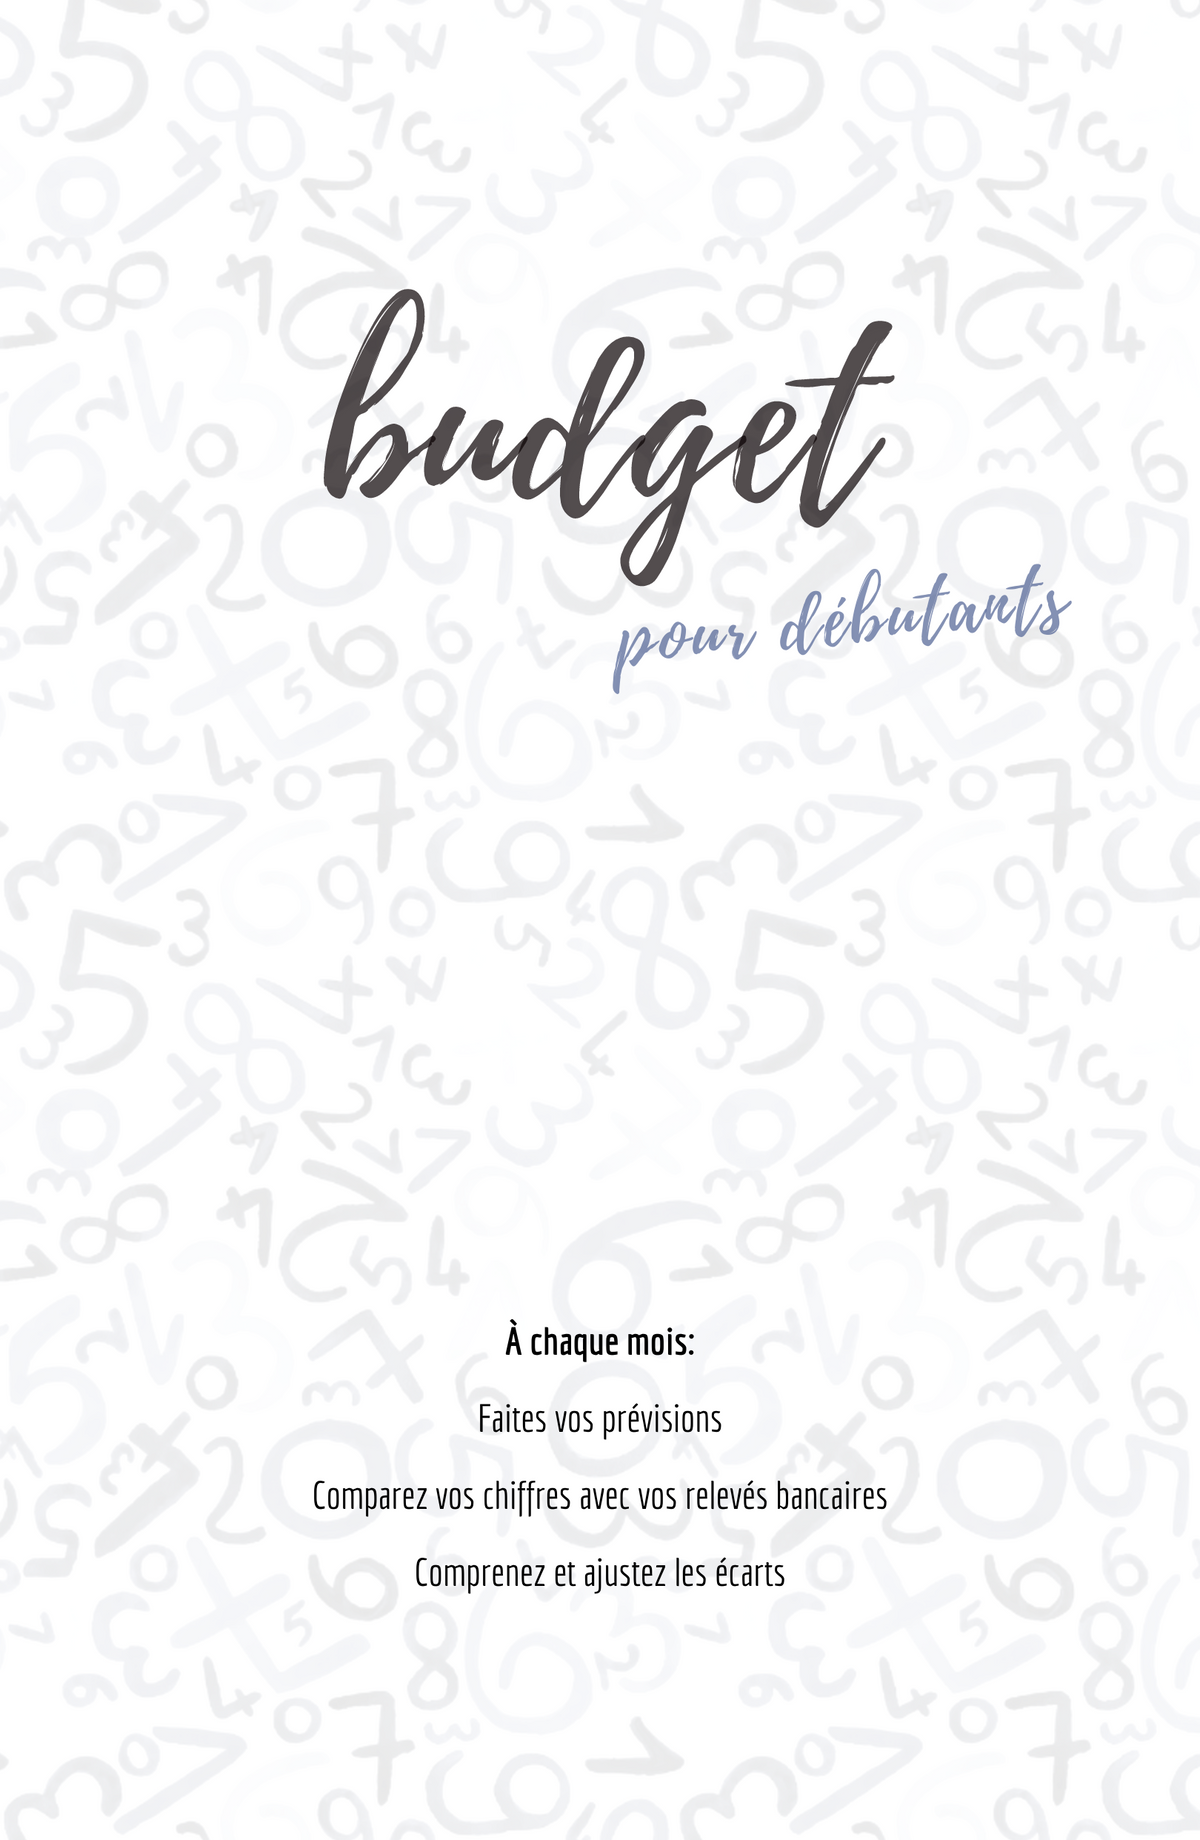 Agenda &amp; budget #60